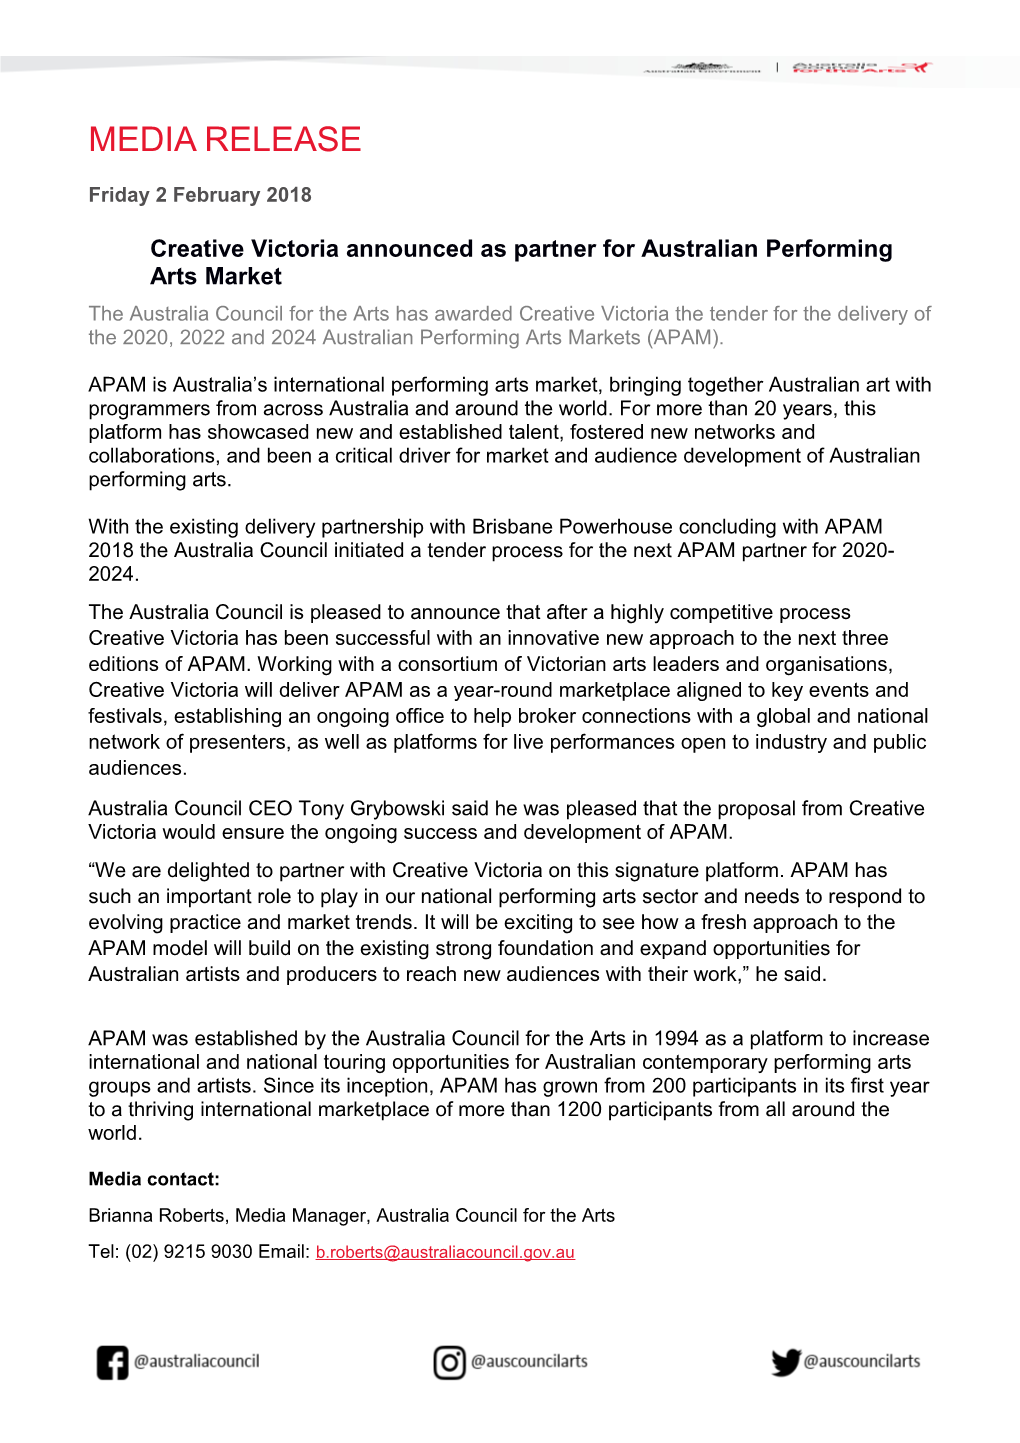 Creative Victoria Announced As Partner for Australian Performing Arts Market